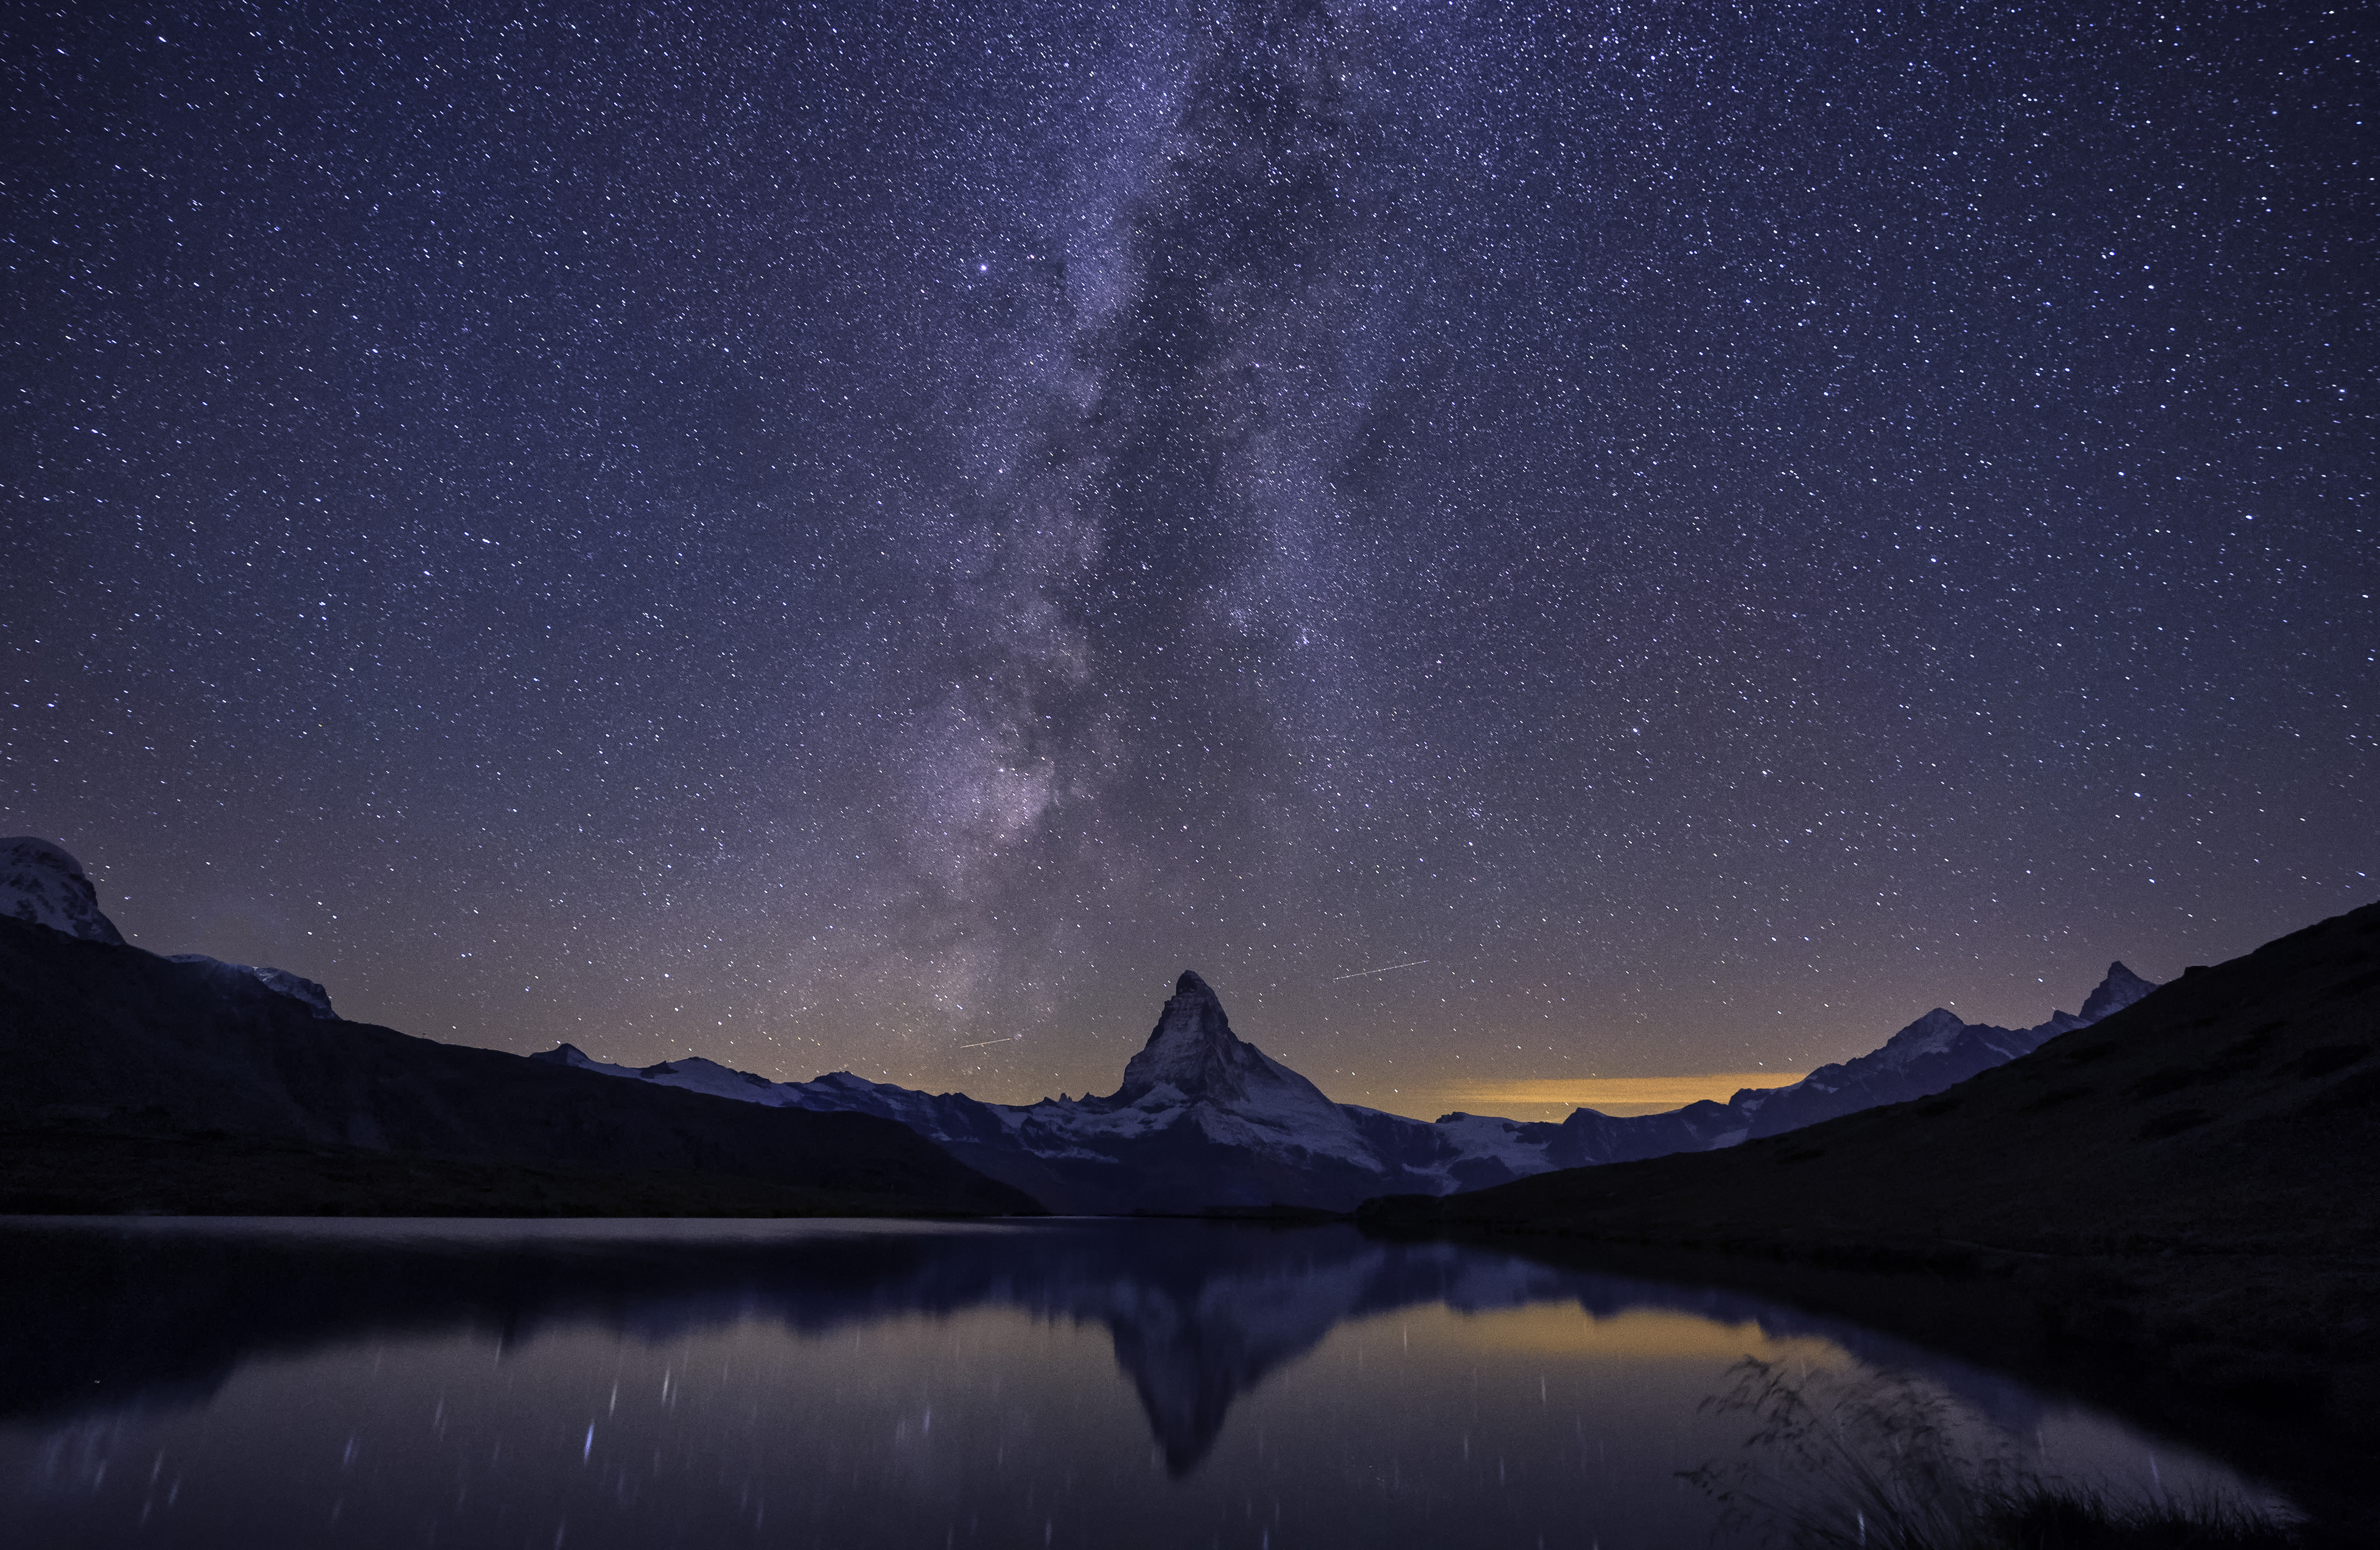 Matterhorn,a milky way and a reflection near the lake at night, Switzerland